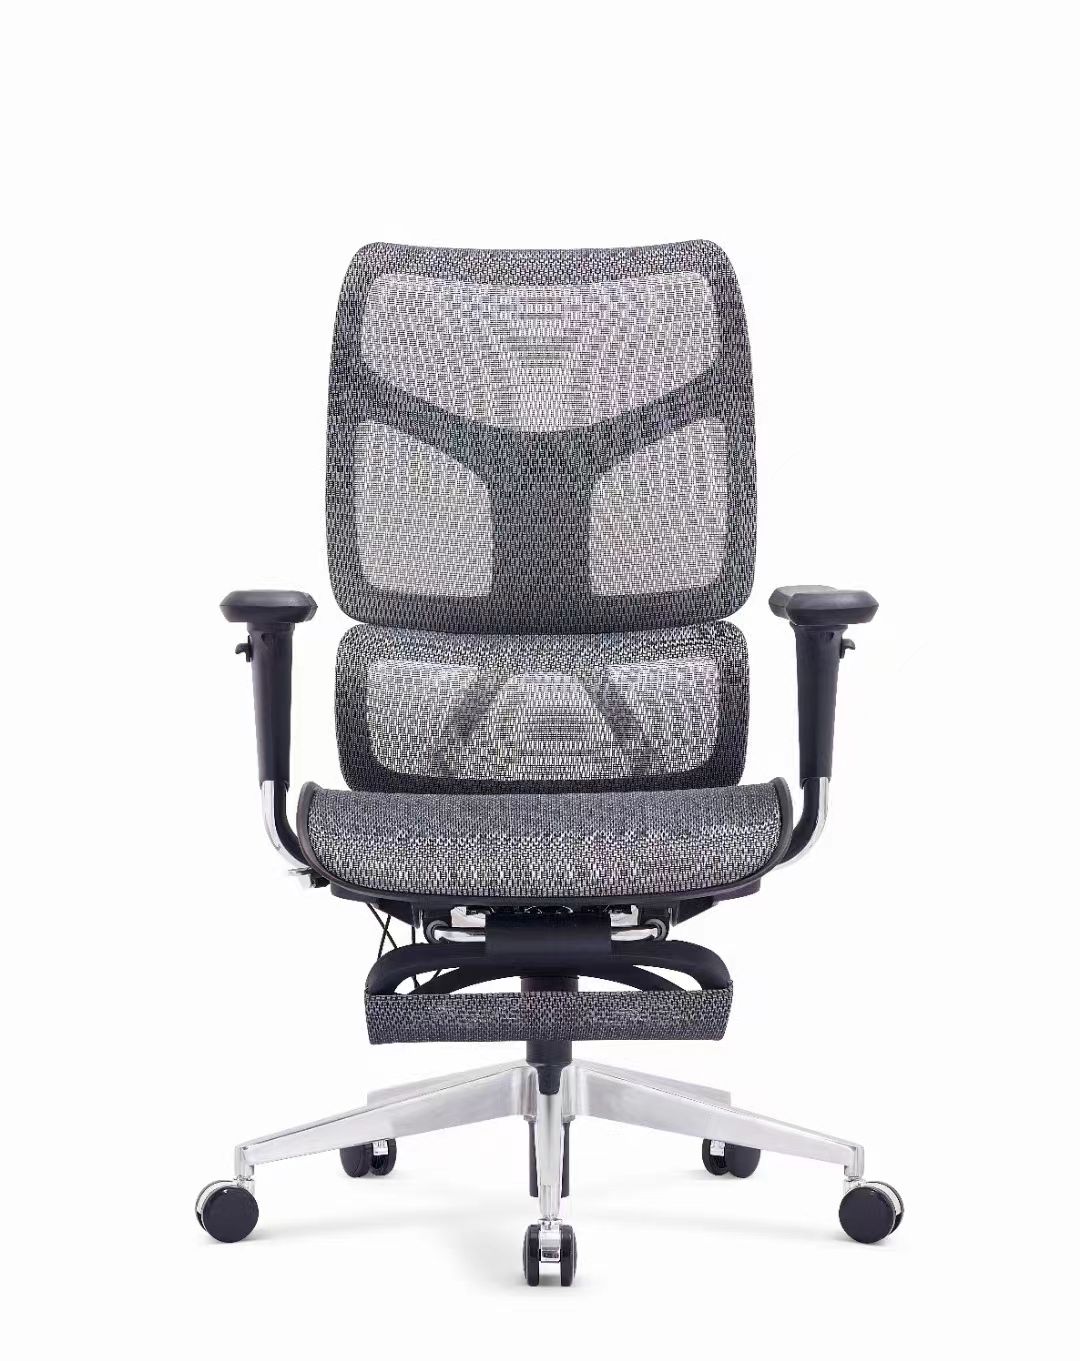 Otthoni ergonomikus irodai szék